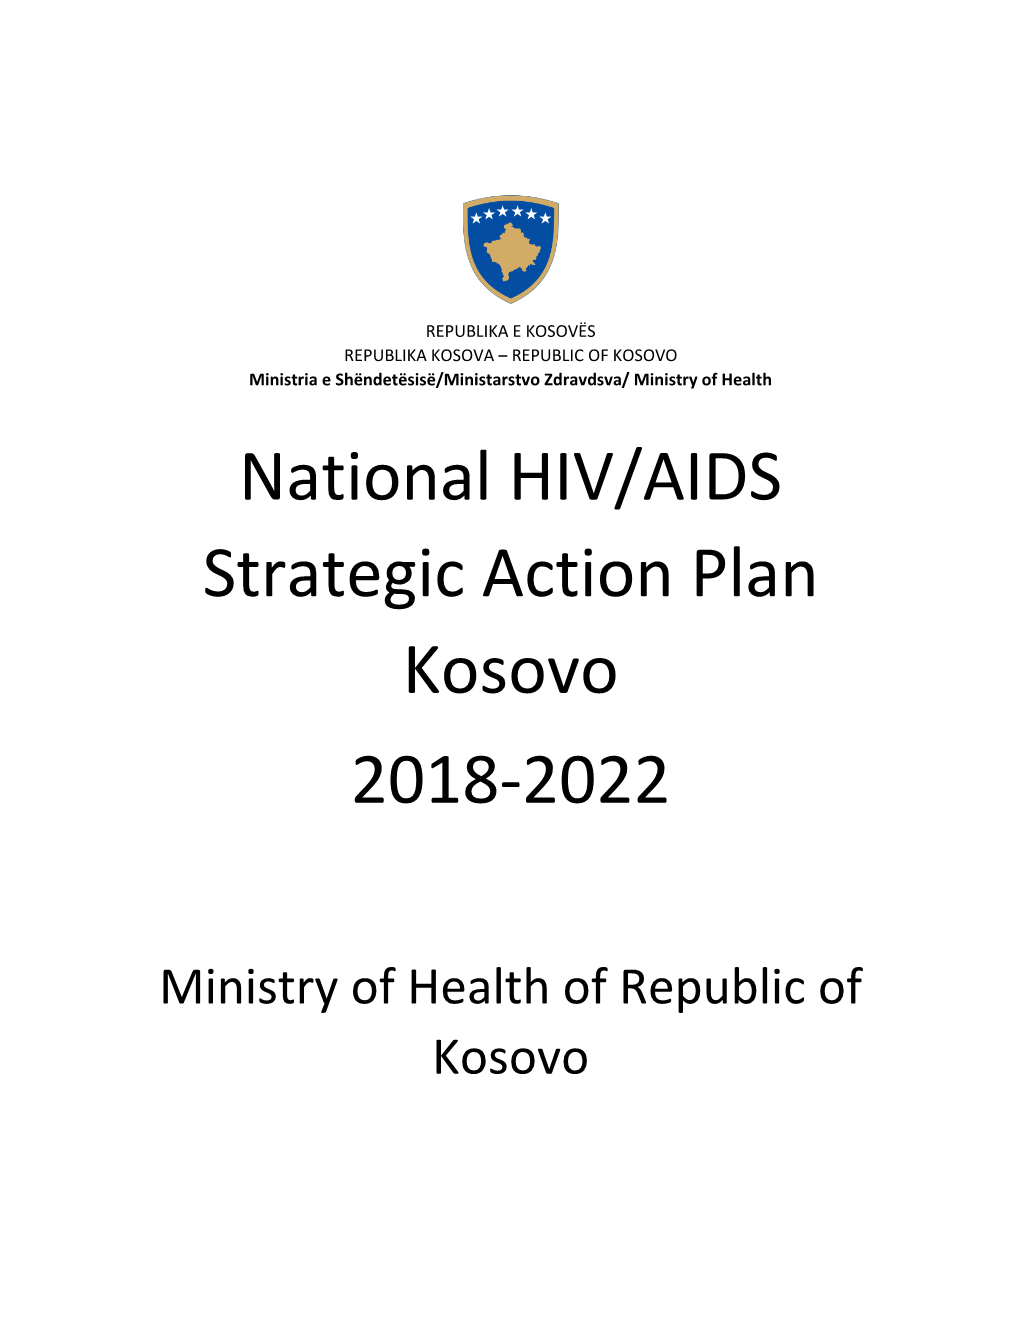 National HIV/AIDS Strategic Action Plan Kosovo 2018-2022